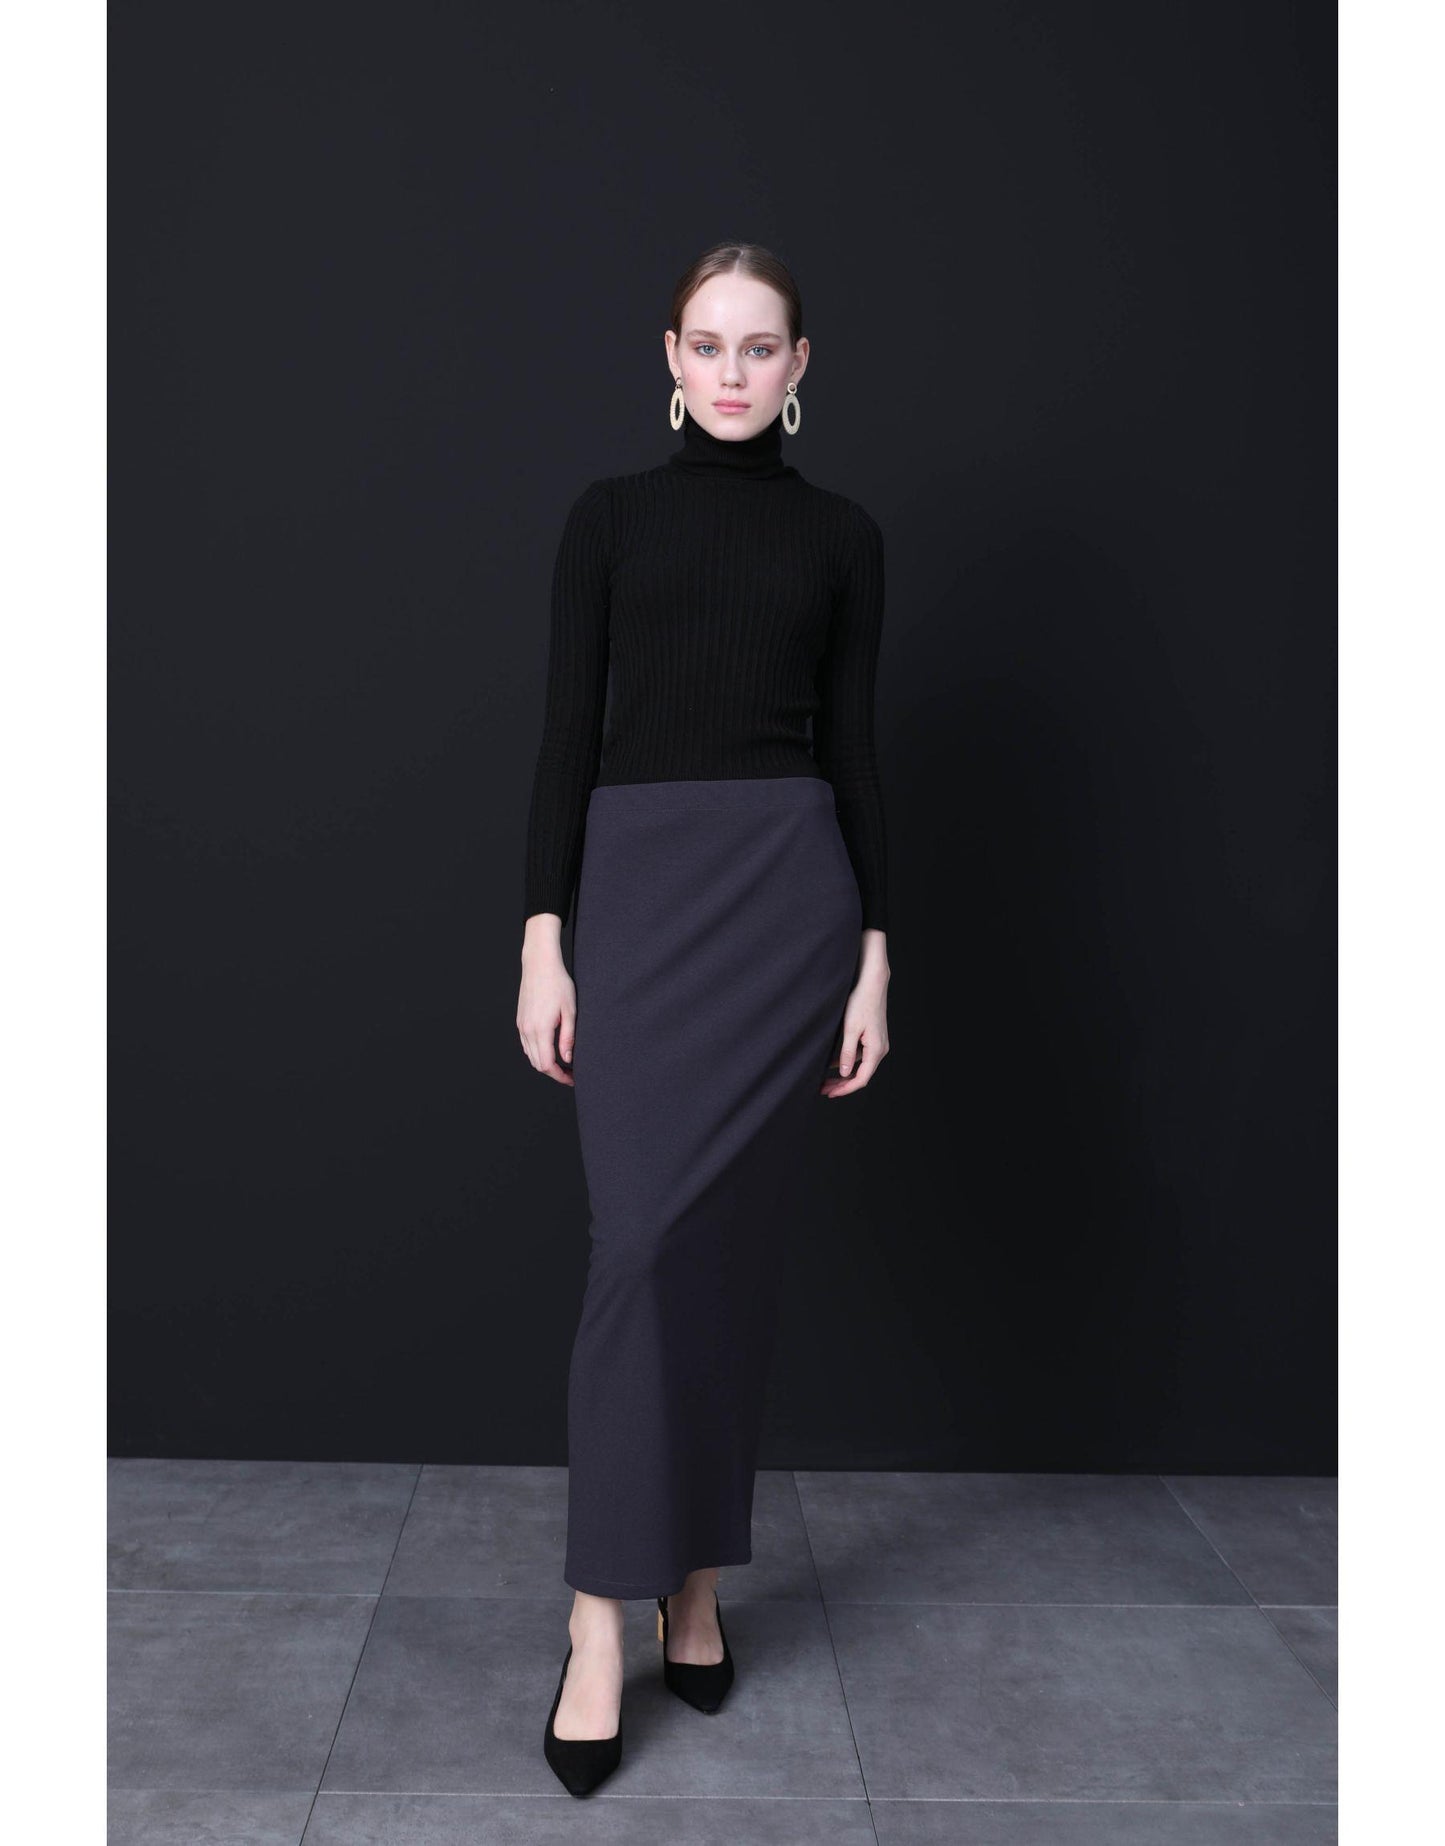 Zara Pencil Skirt- Charcoal